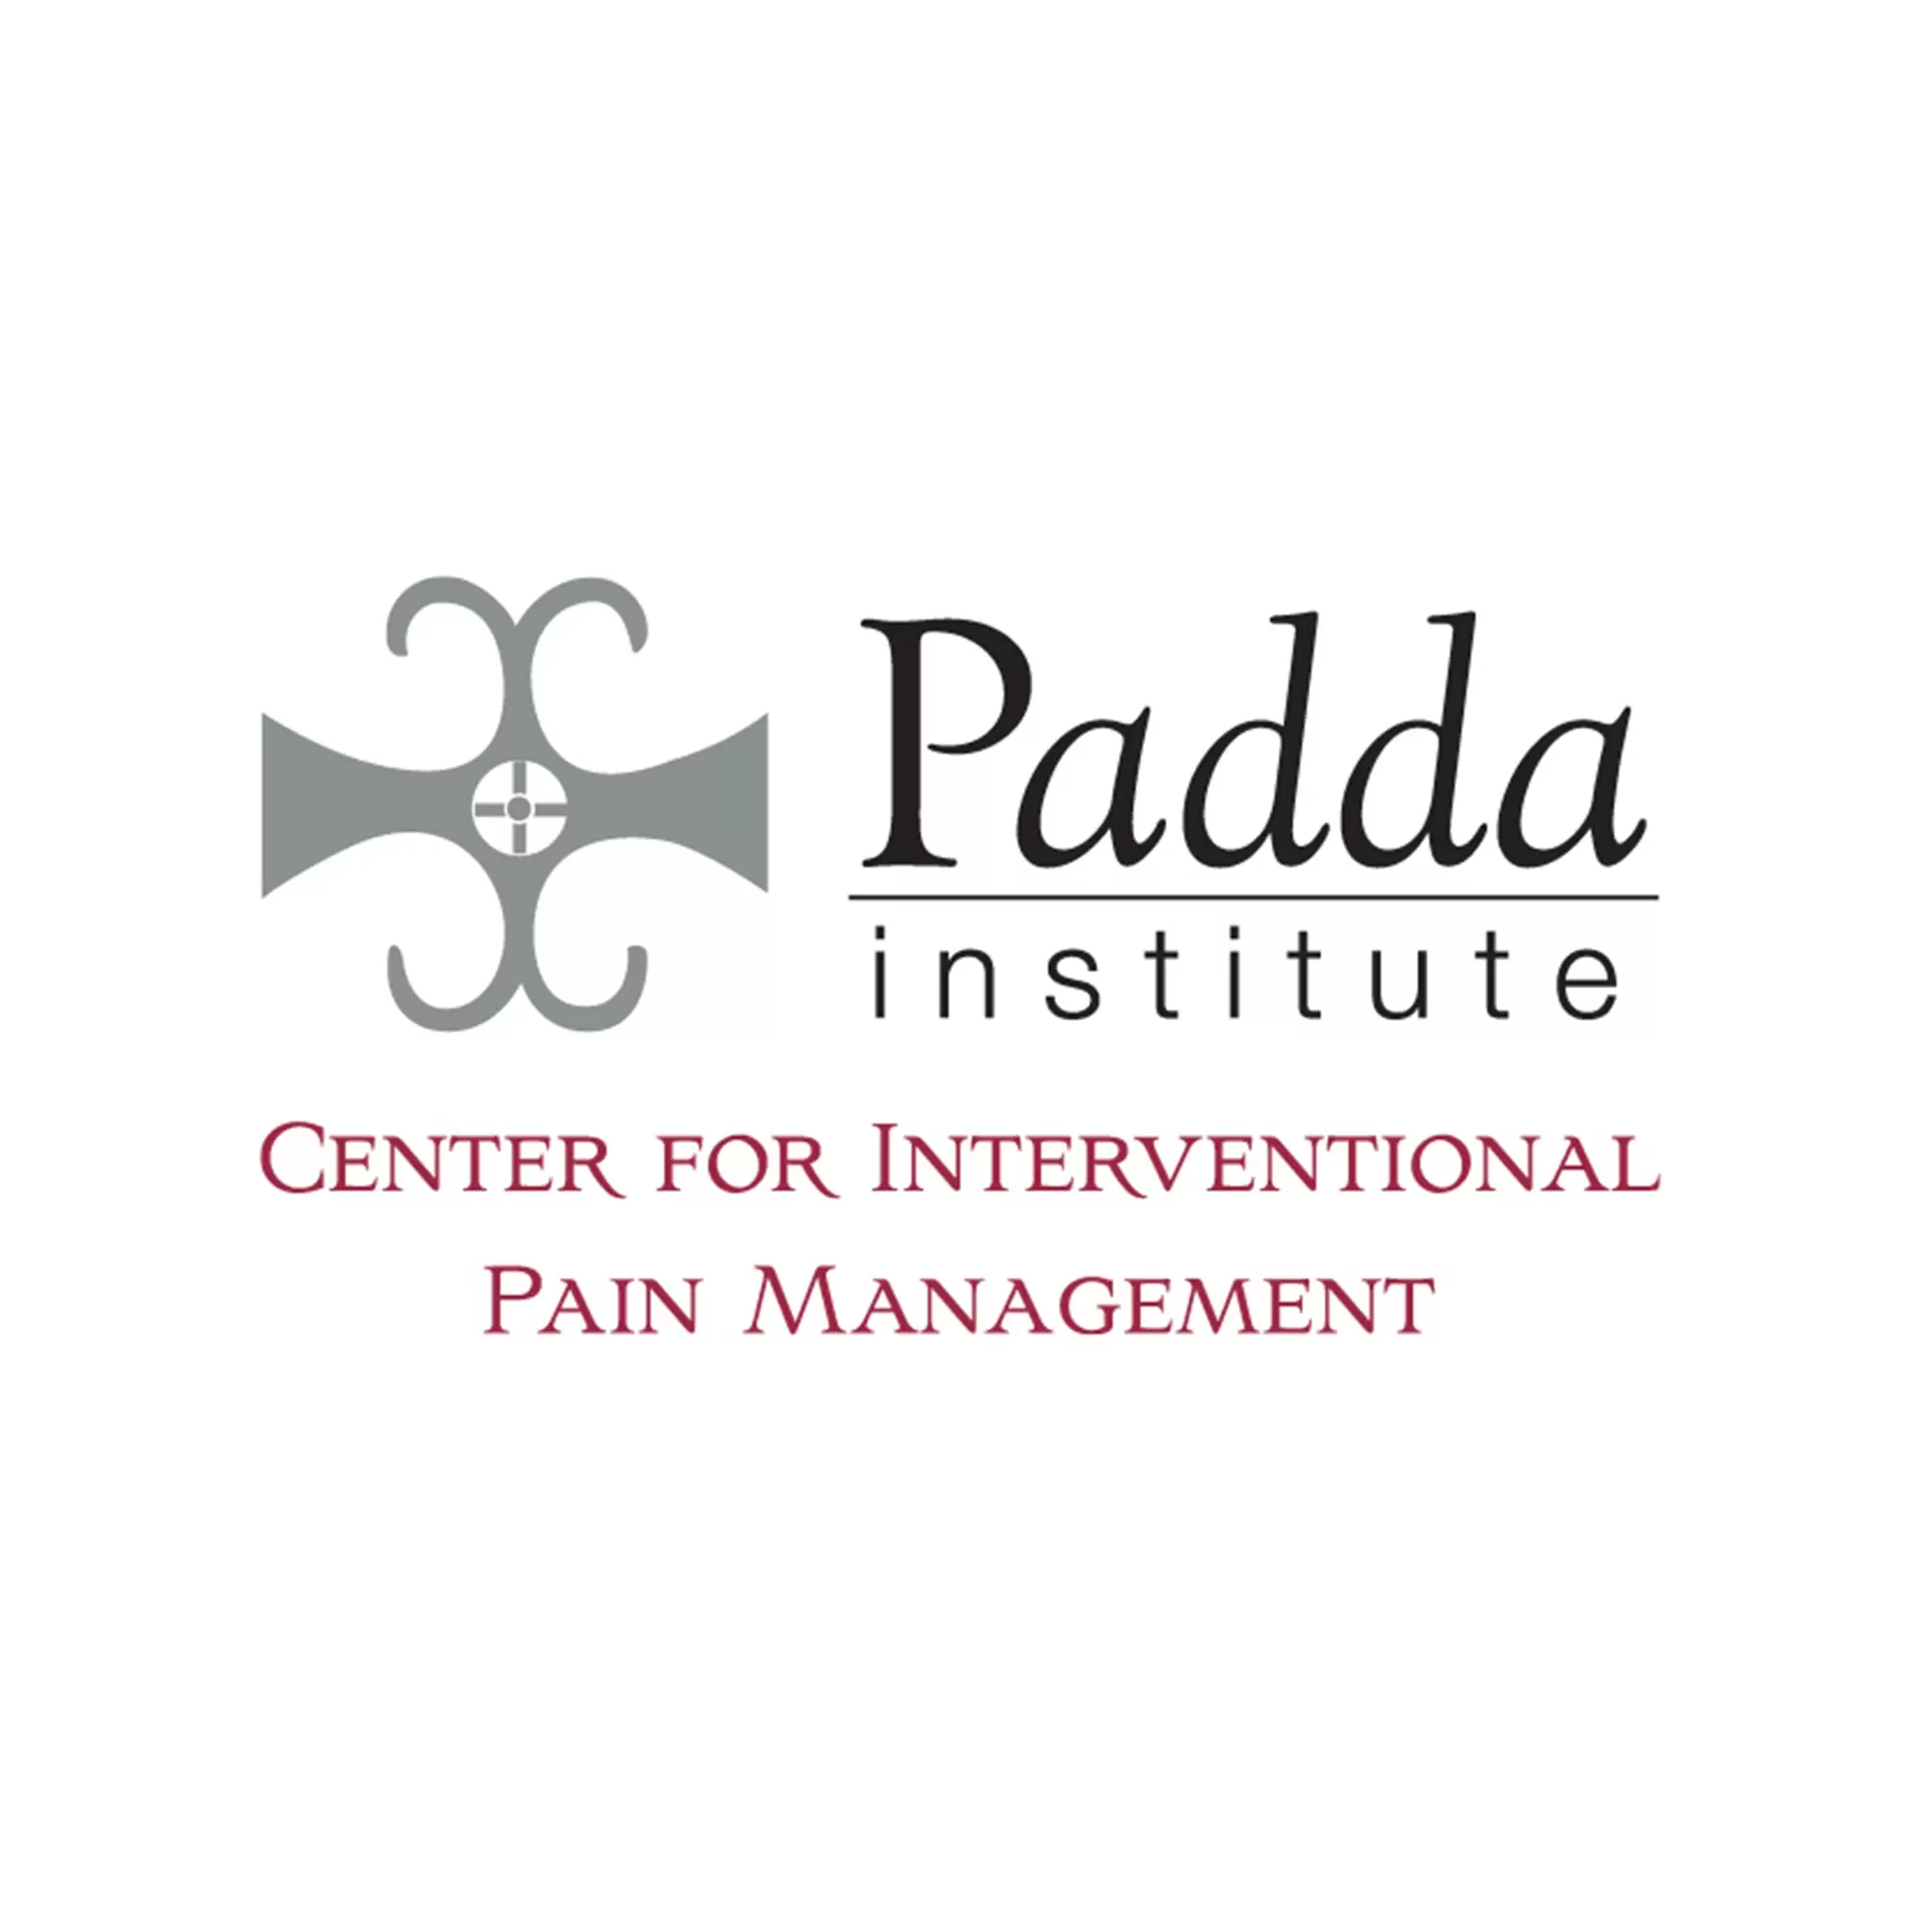 Padda Institute